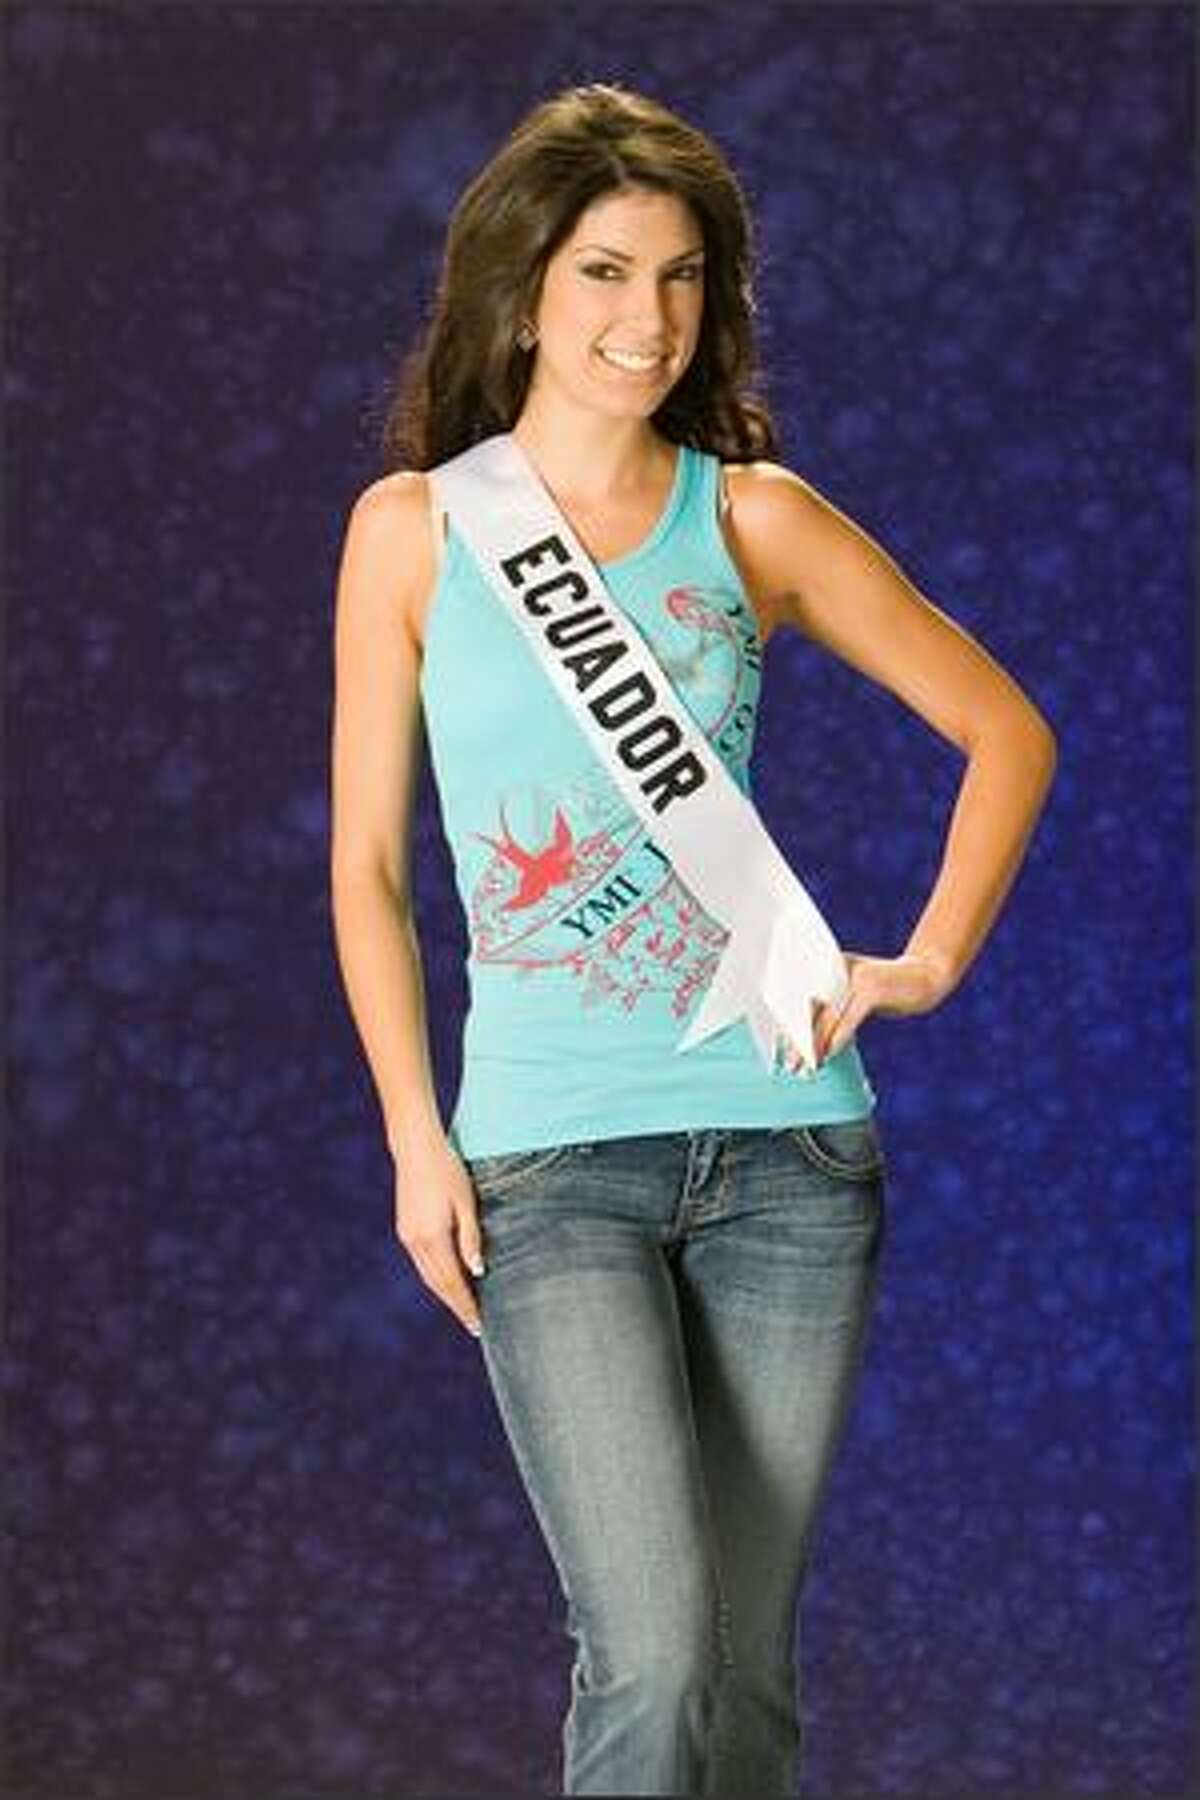 Lugina Cabezas, Miss Ecuador 2007.